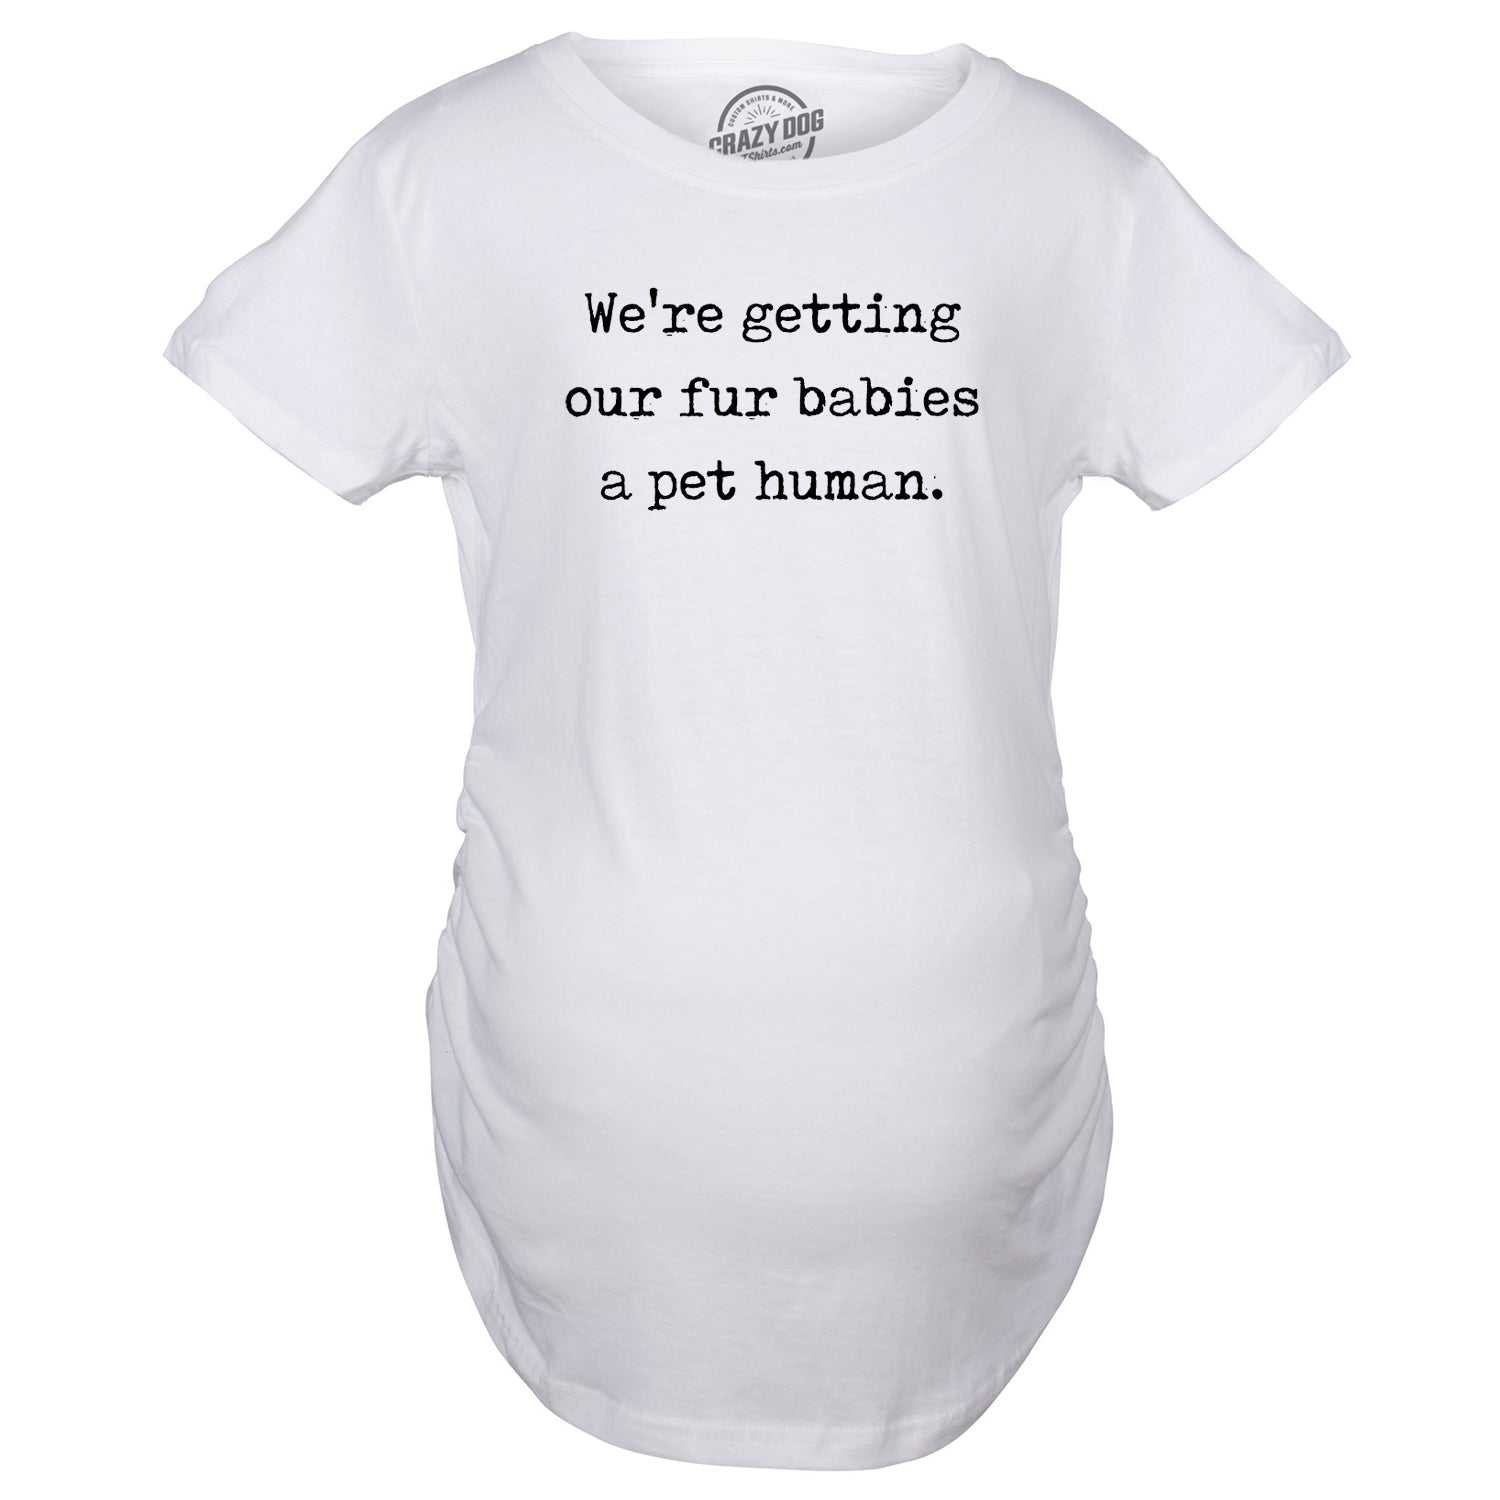 mrsmitful Pregnancy T Shirts - Maternity T Shirts - Pregnancy Shirts - Funny Maternity Shirts Baseball Tee